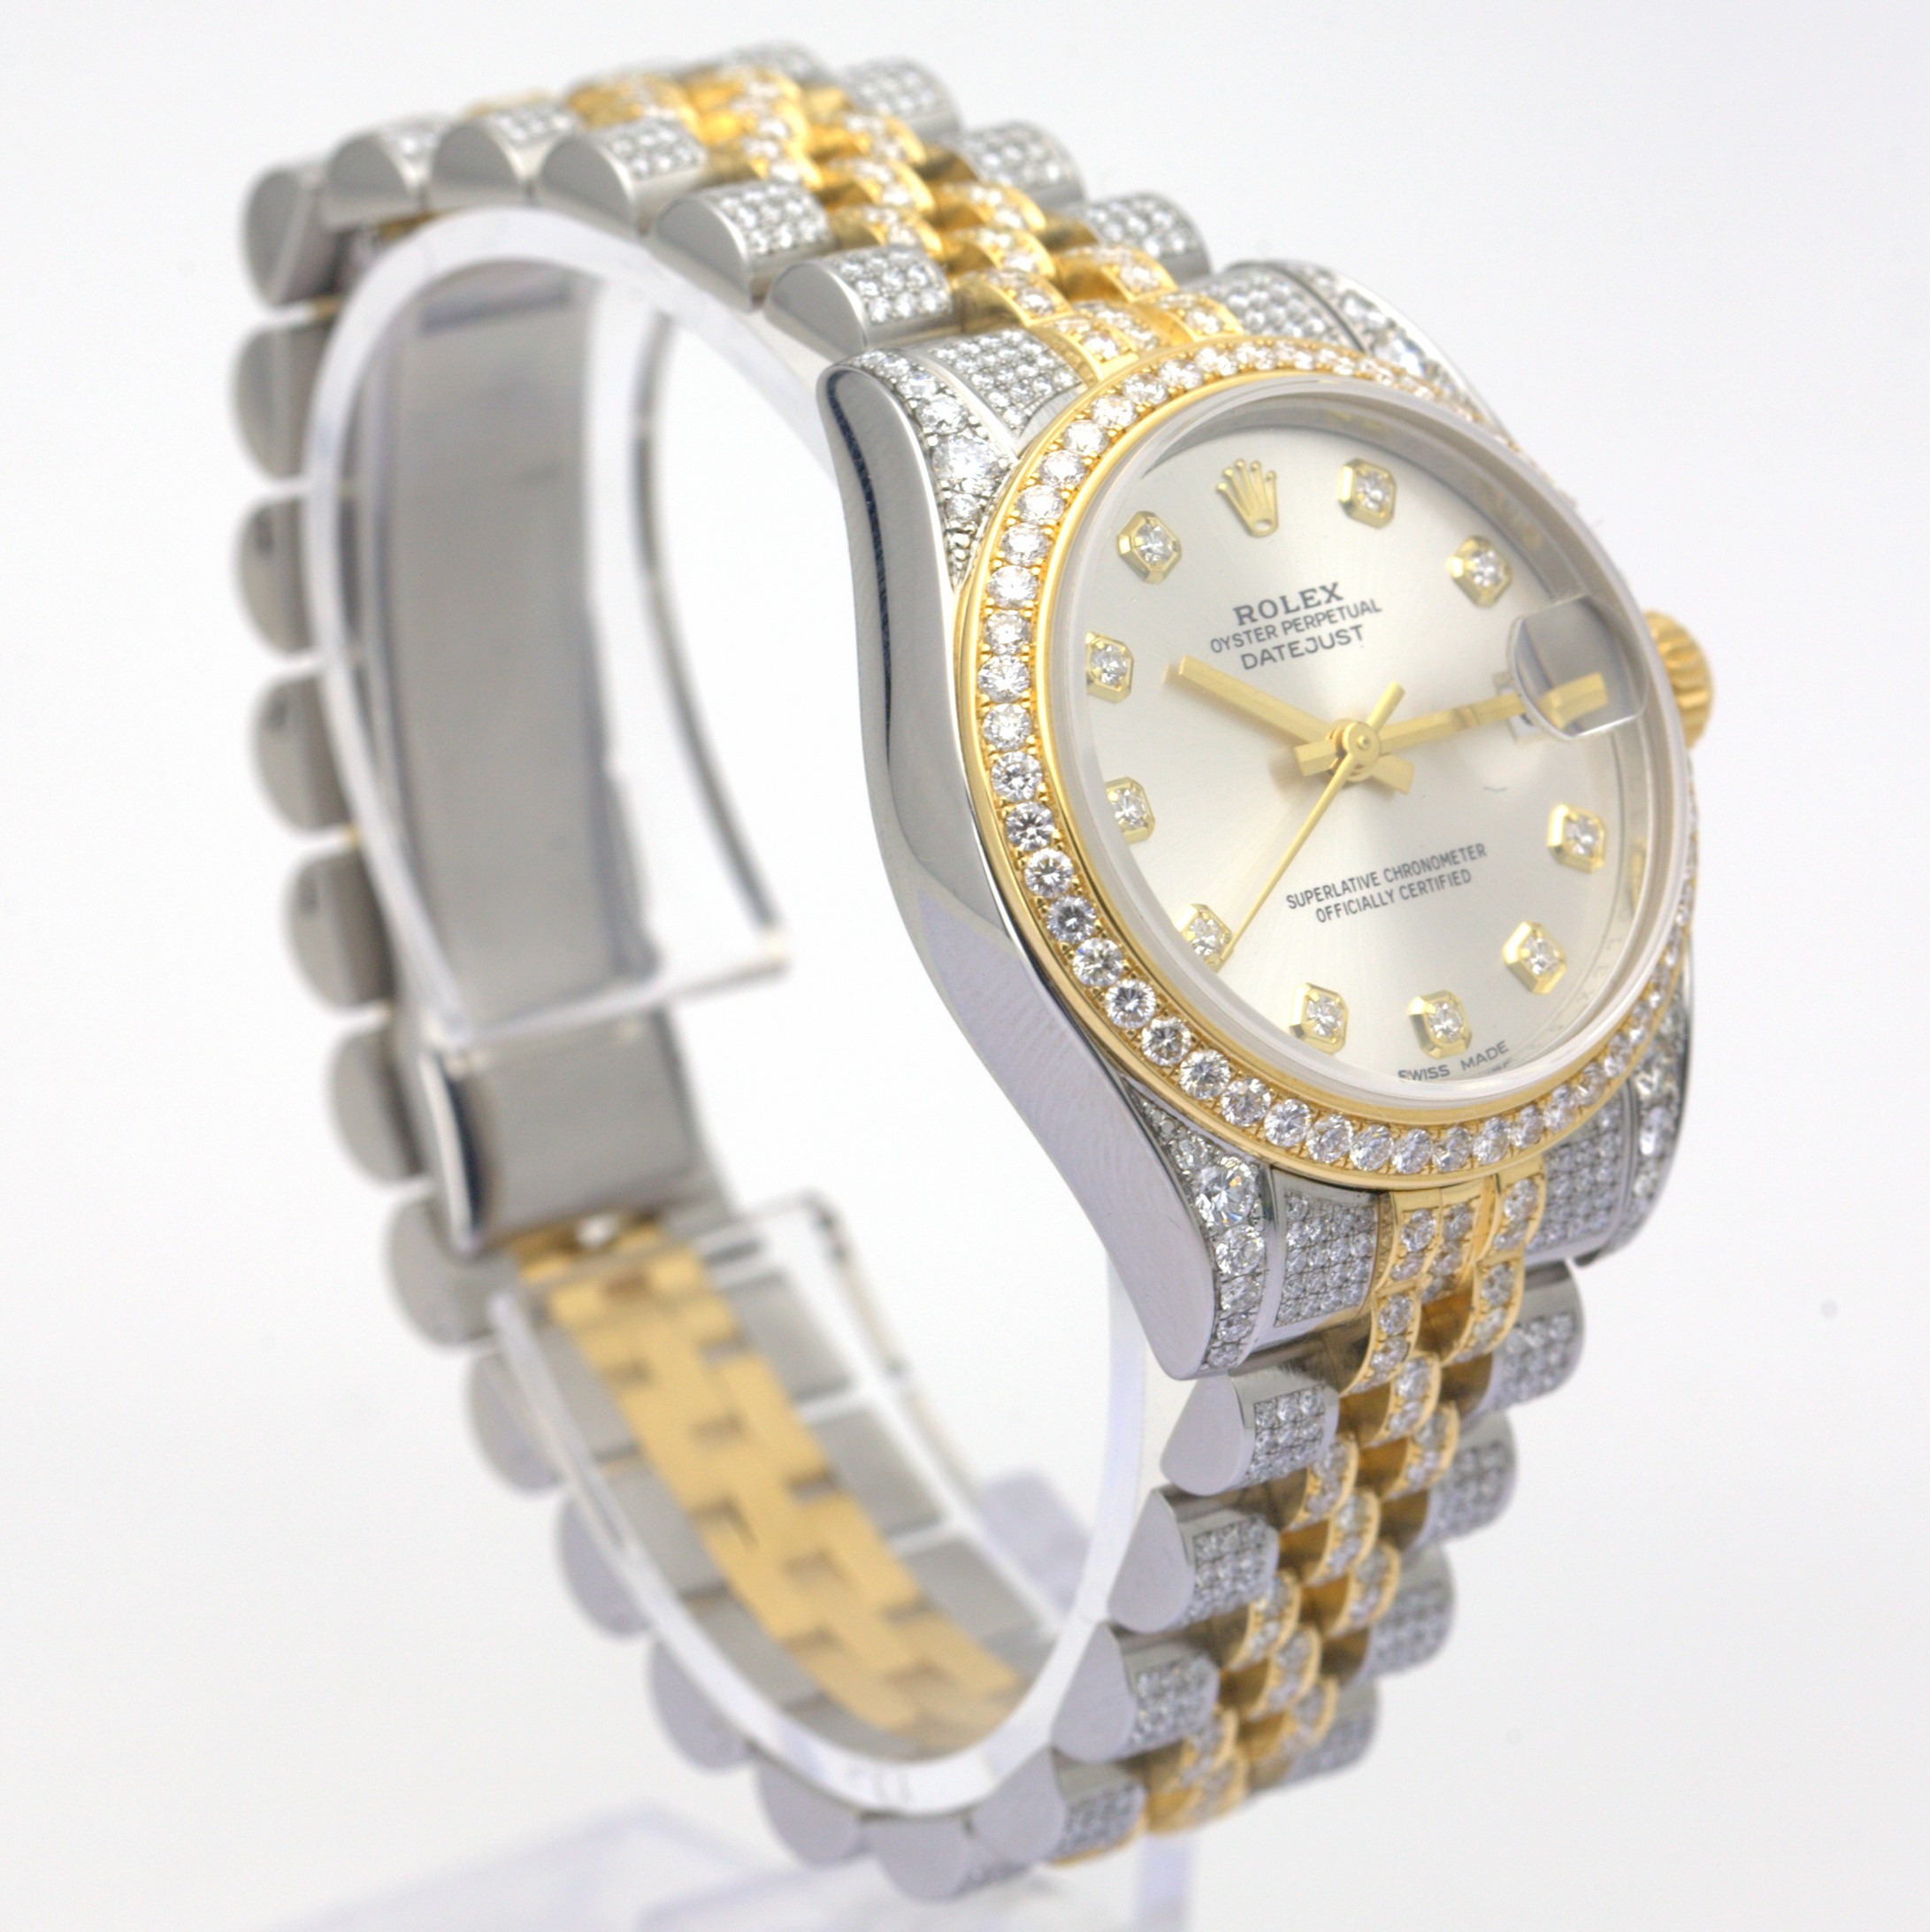 IWC / CALIBER C 8531 - Gentlemen's Yellow gold Wrist Watch - Image 13 of 13